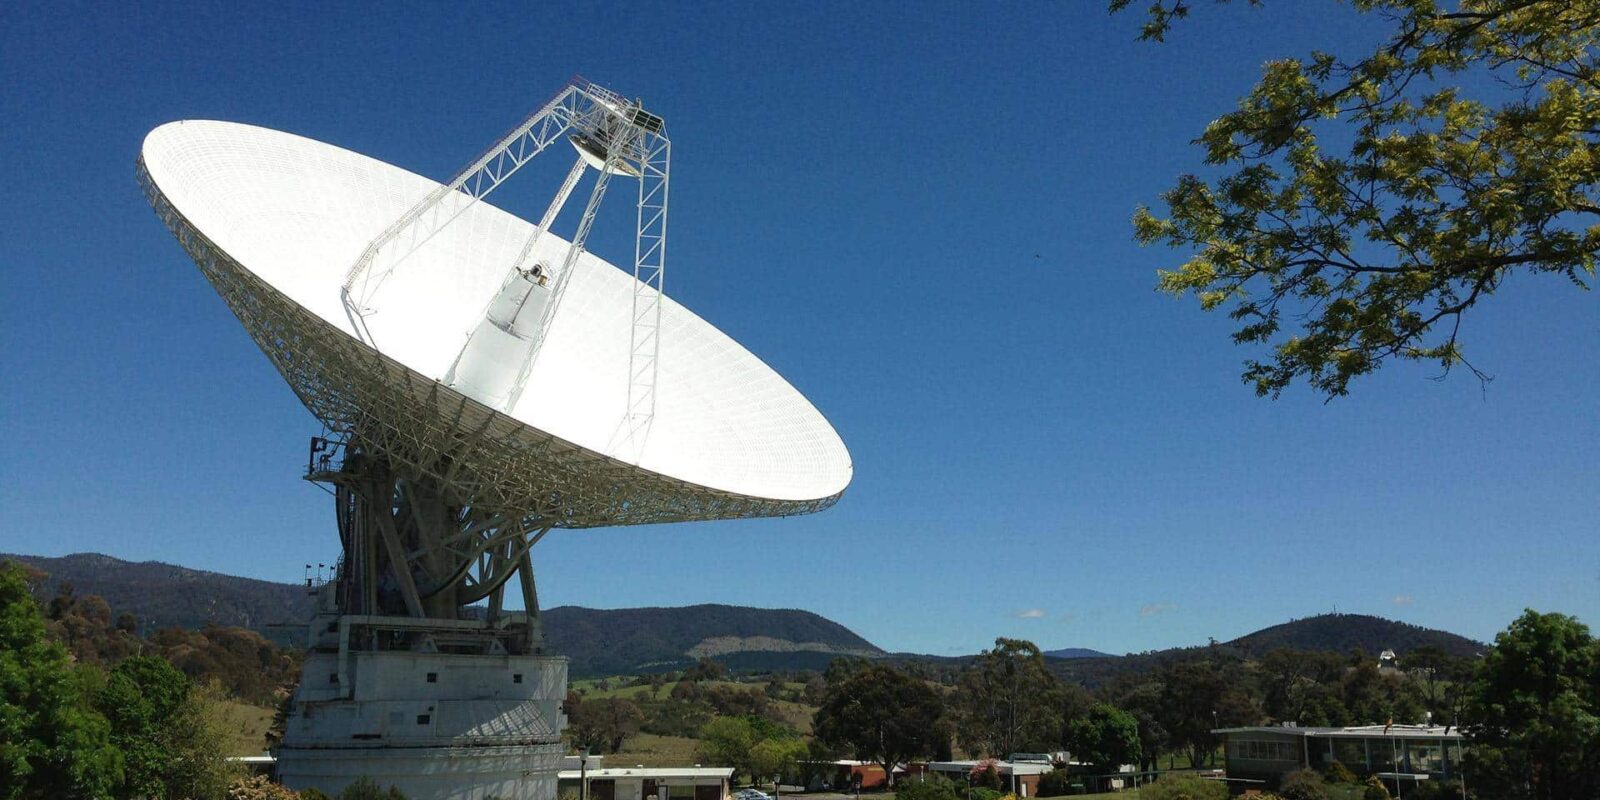 A Voyager 2 voltou a se comunicar com a Terra após 8 meses